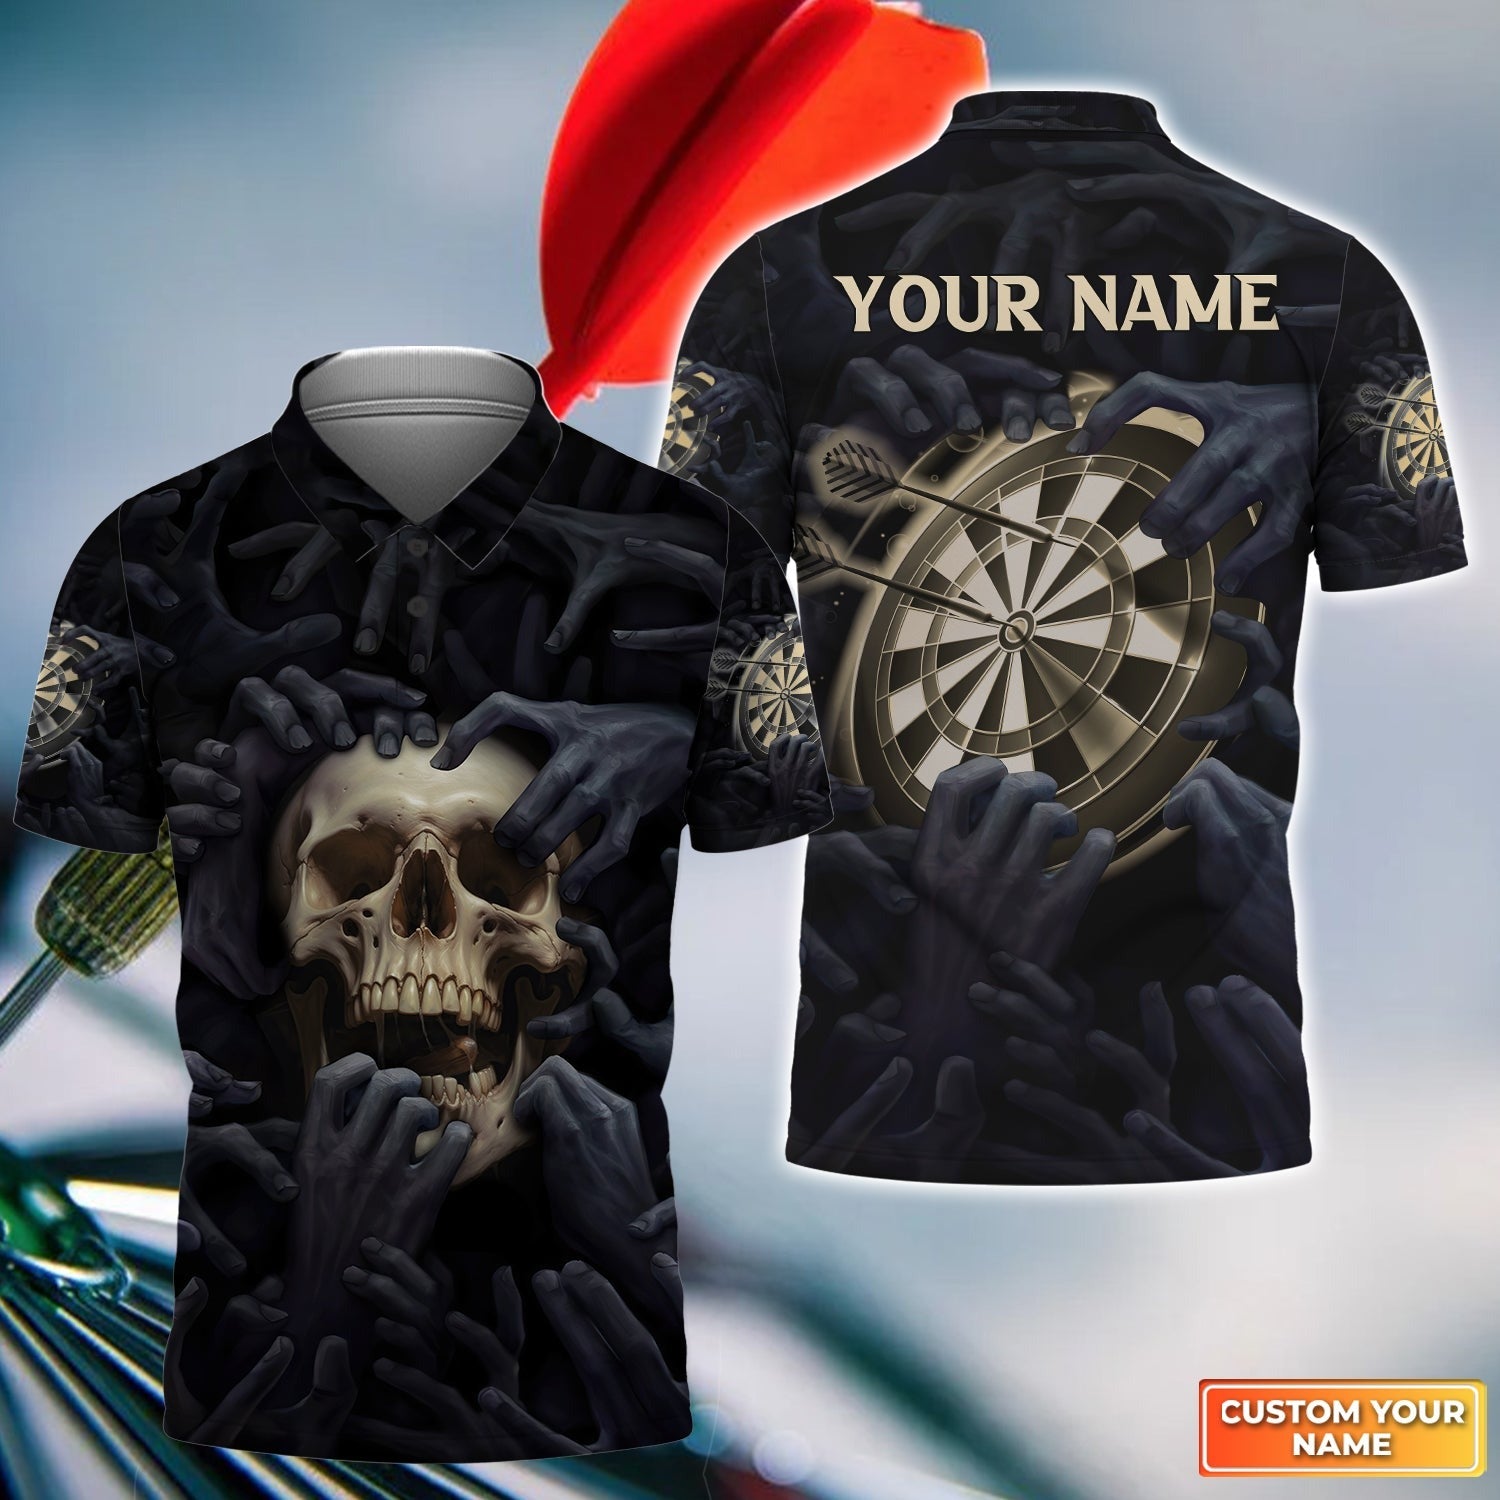 Customized Name Darts Men Polo Shirt, Skull Art Dartboard Personalized Skull And Darts Polo Shirt - Gift For Darts Players Uniforms, Darts Lovers